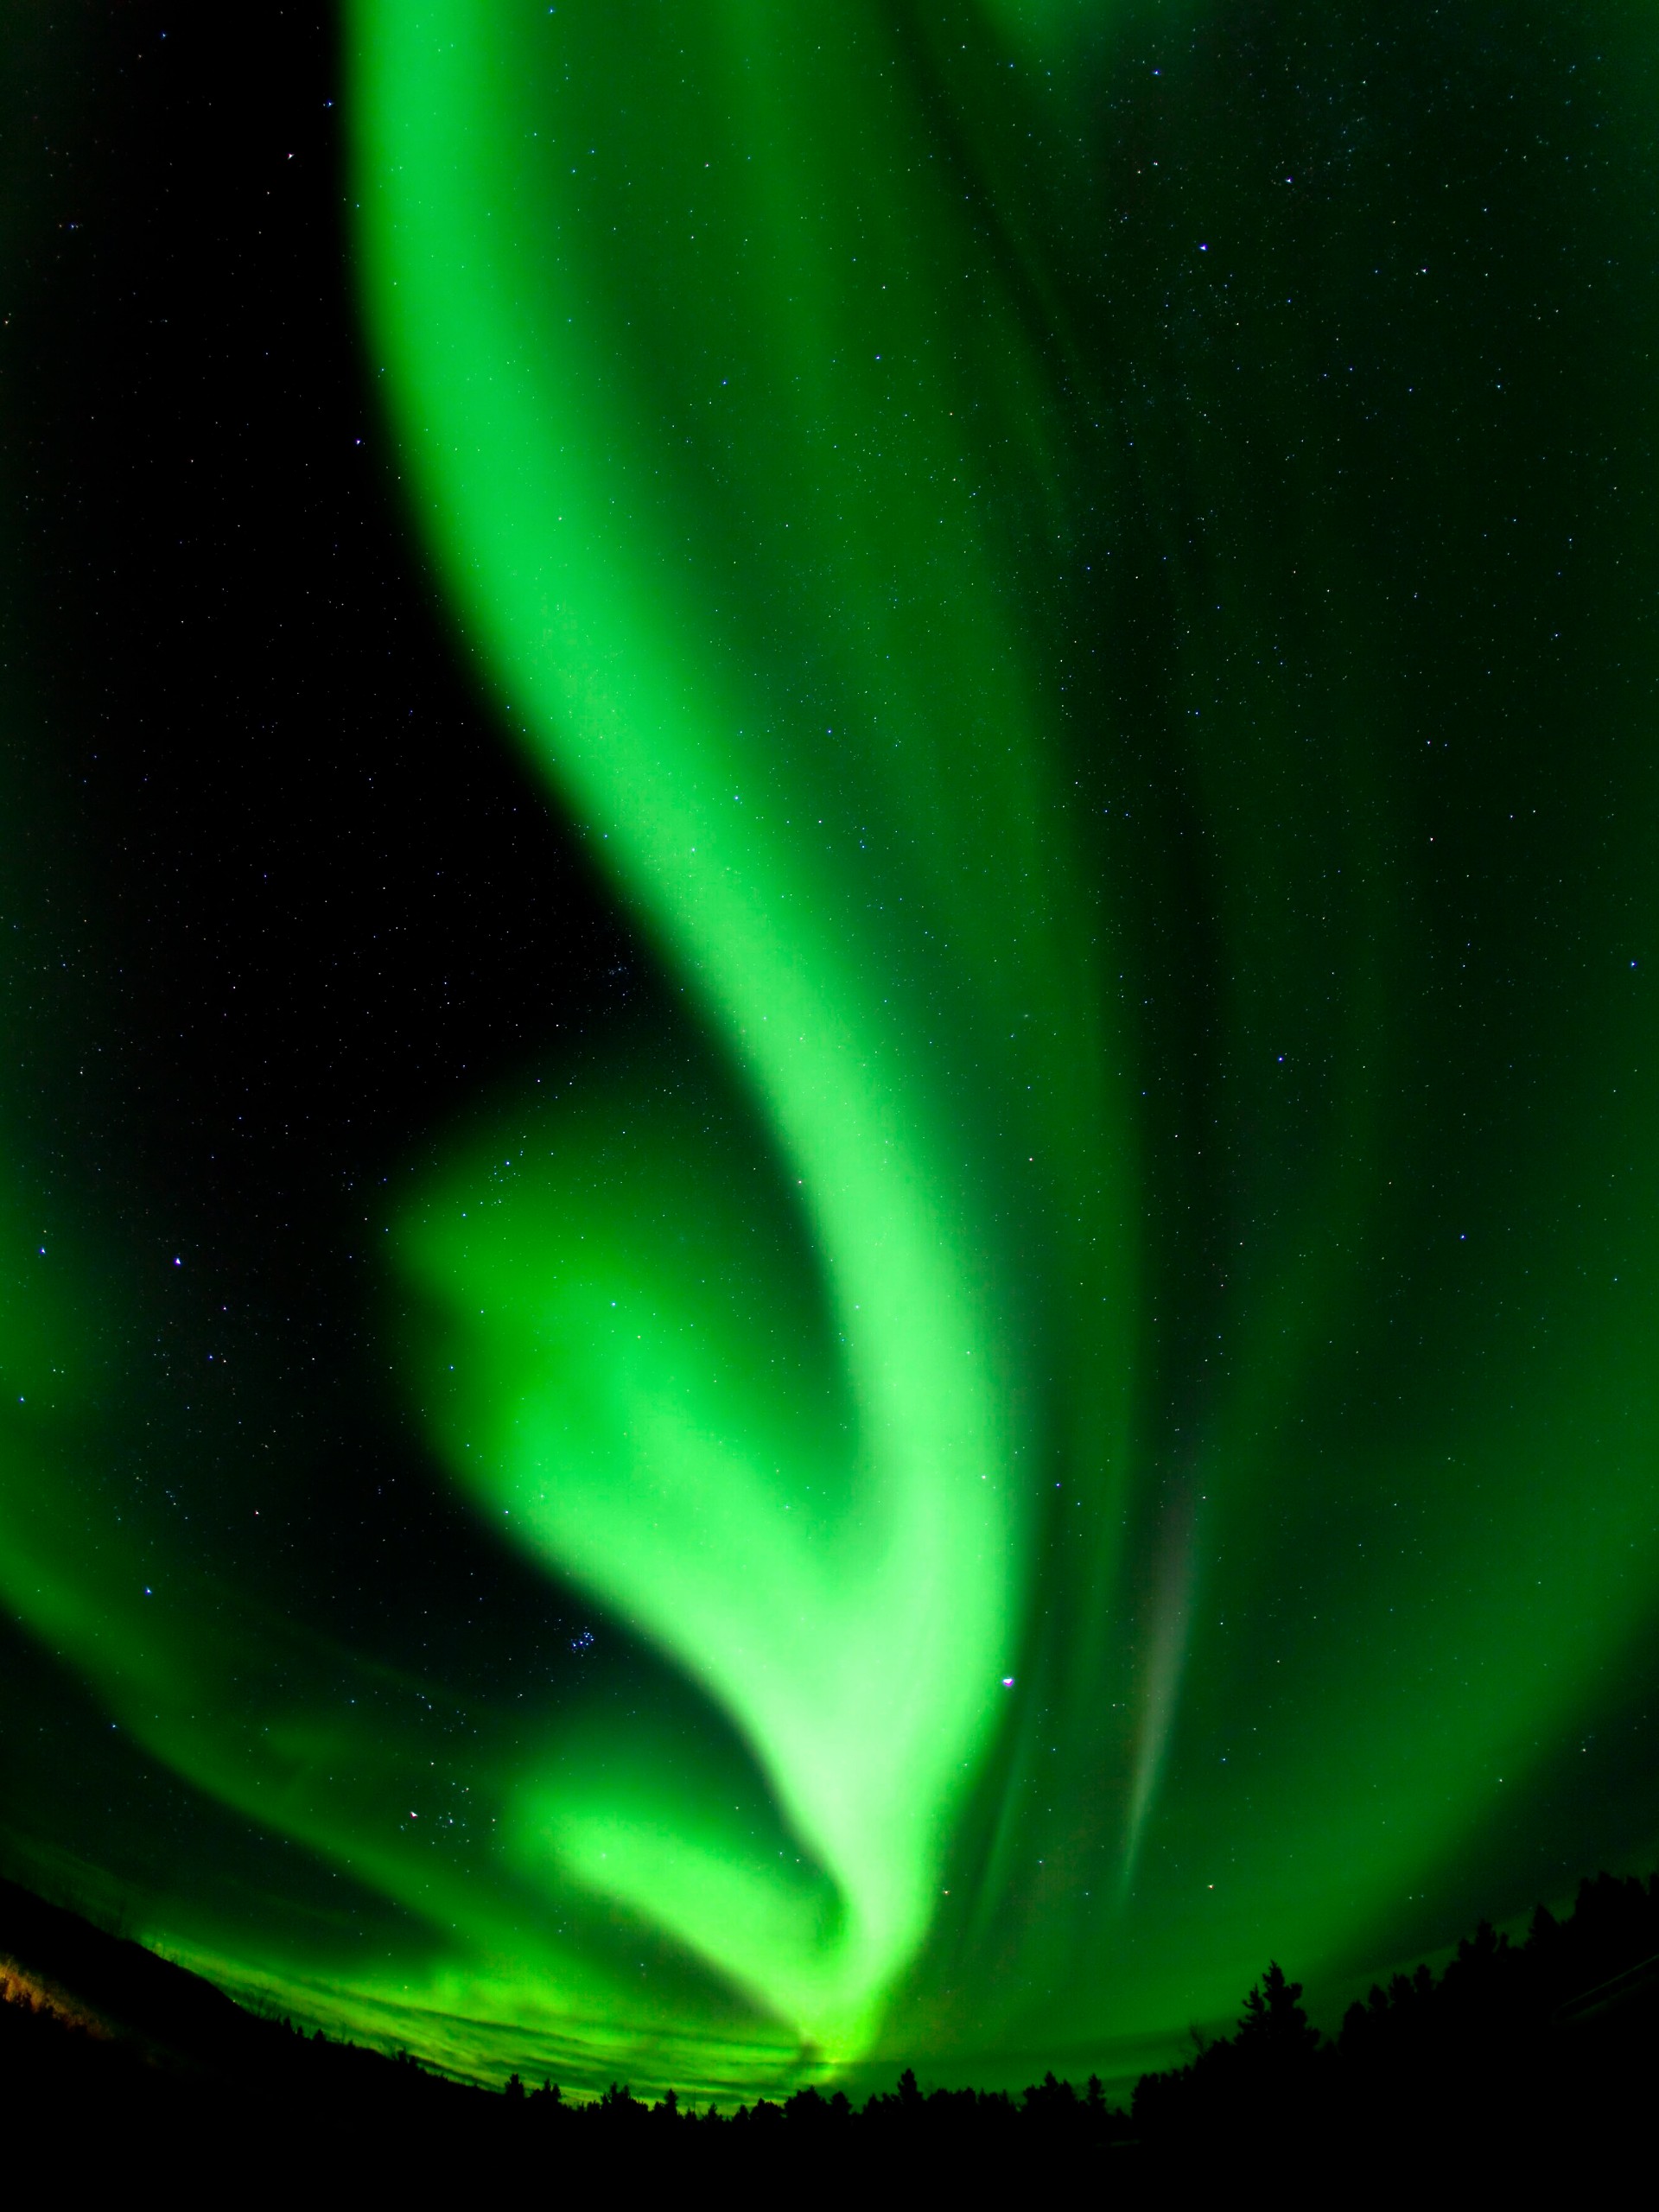 Green Northern Lights seen in Yukon